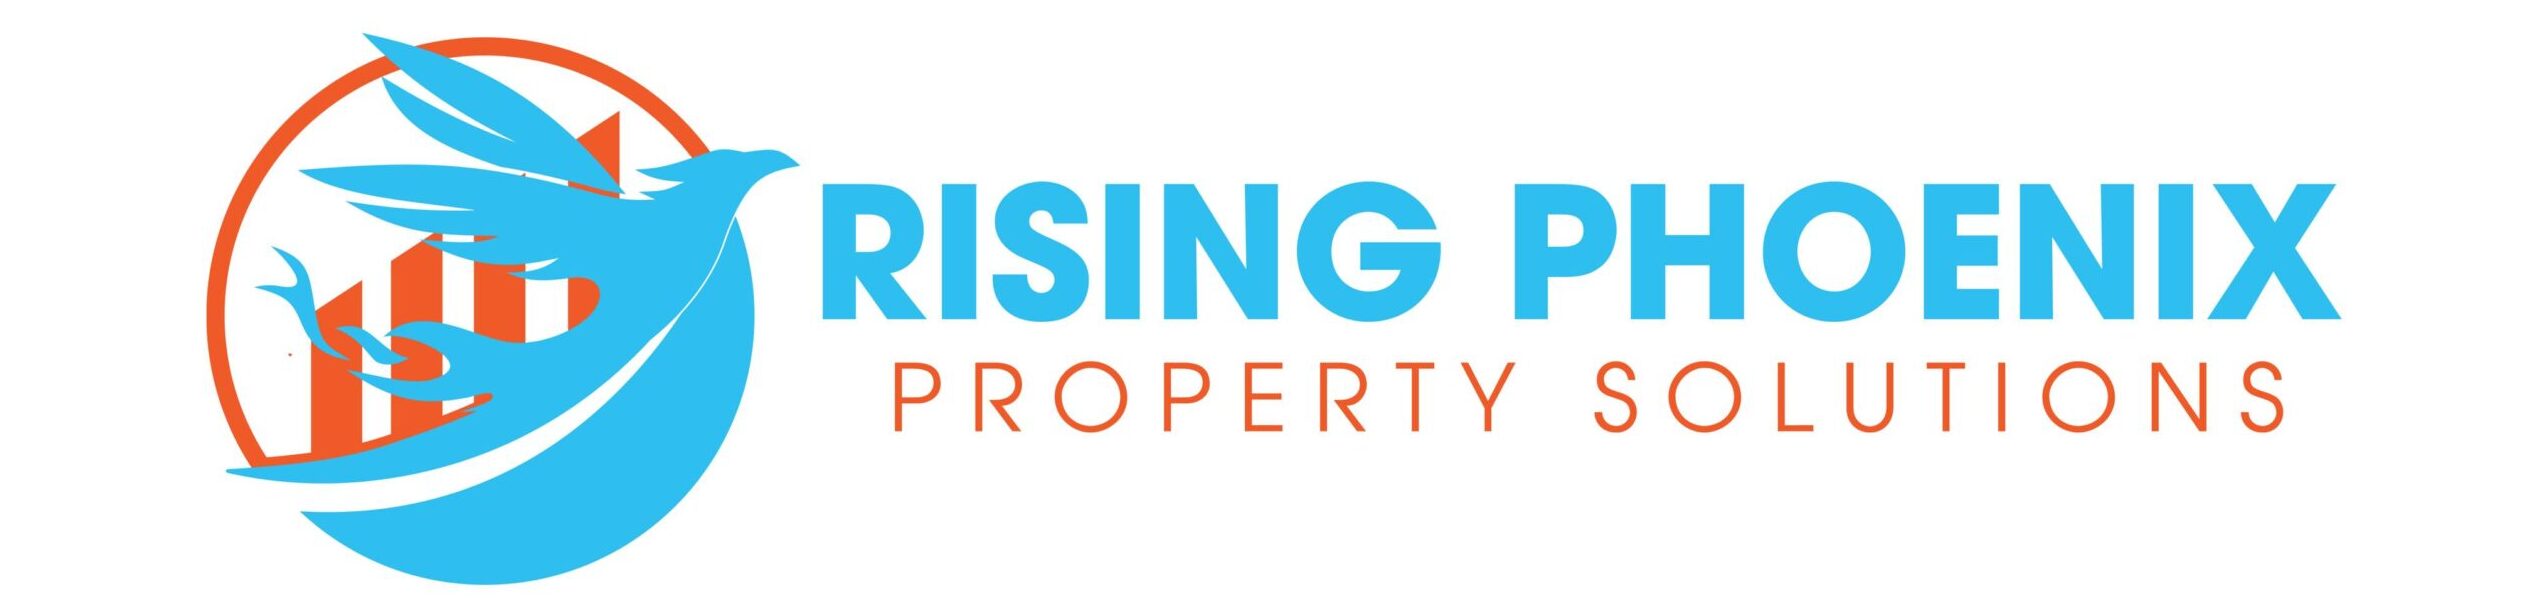 Rising Phoenix Property Solutions